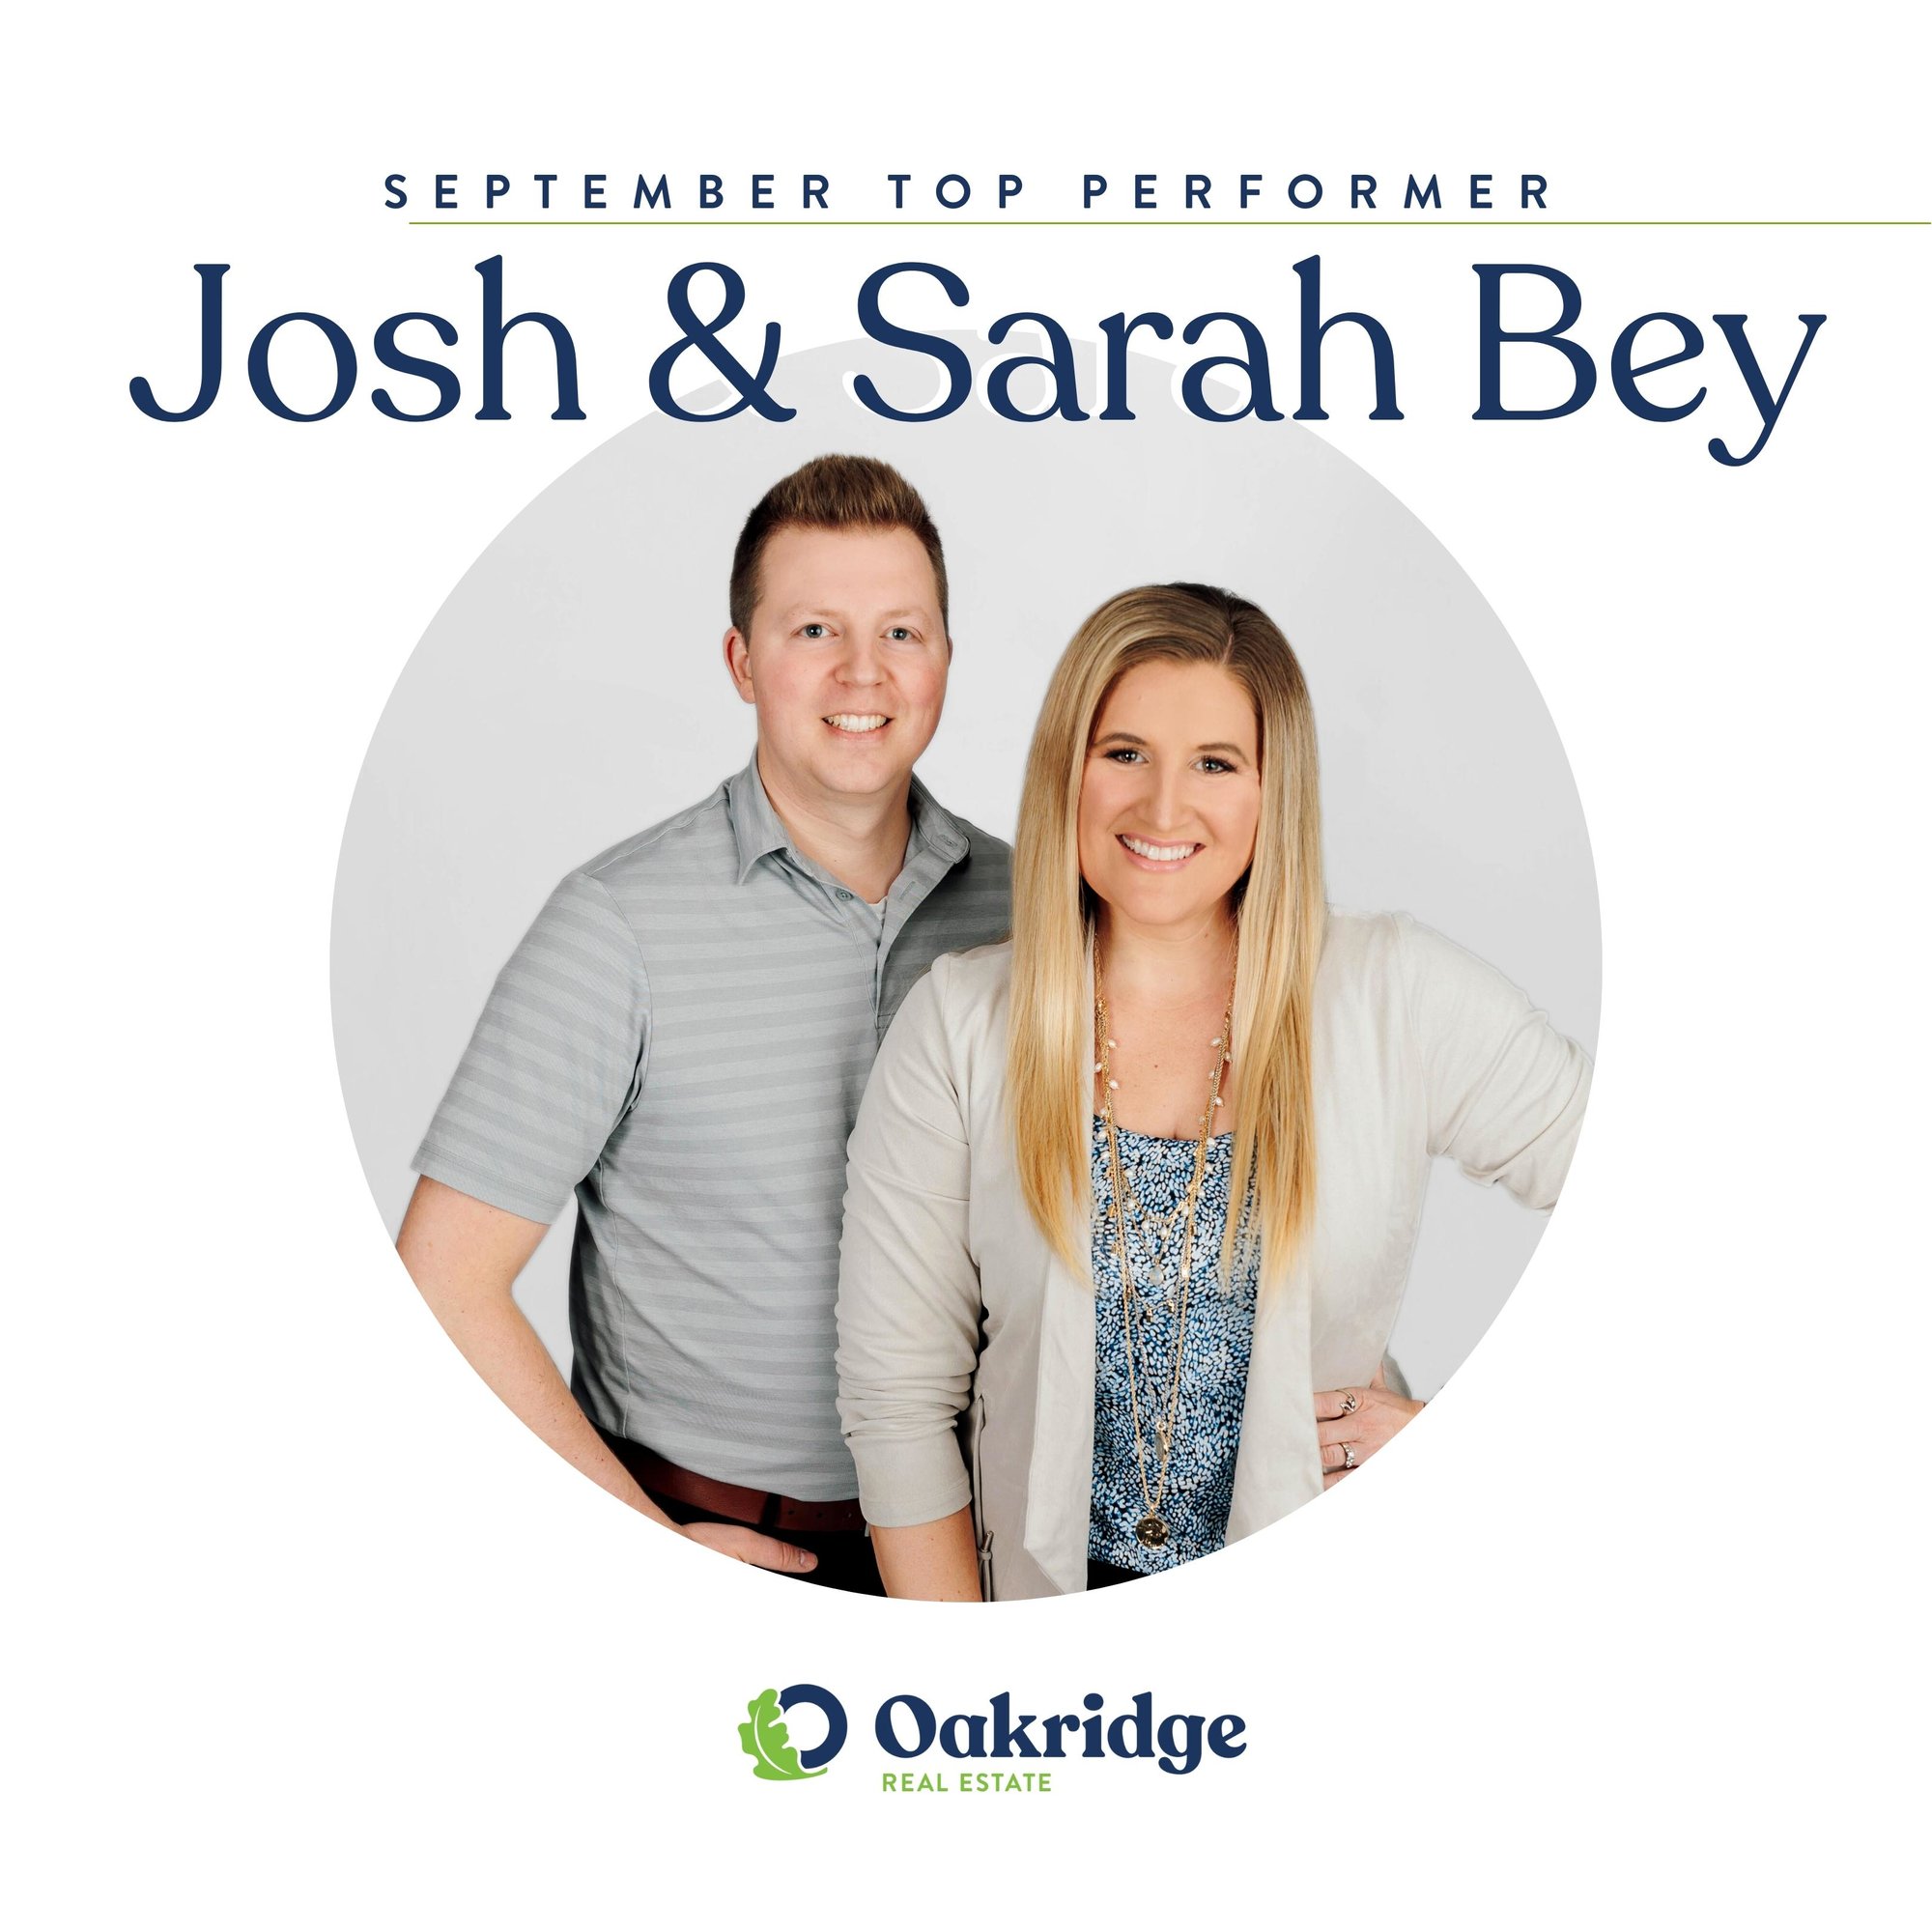 Josh & Sarah Bey September Top Performer | Oakridge Real Estate